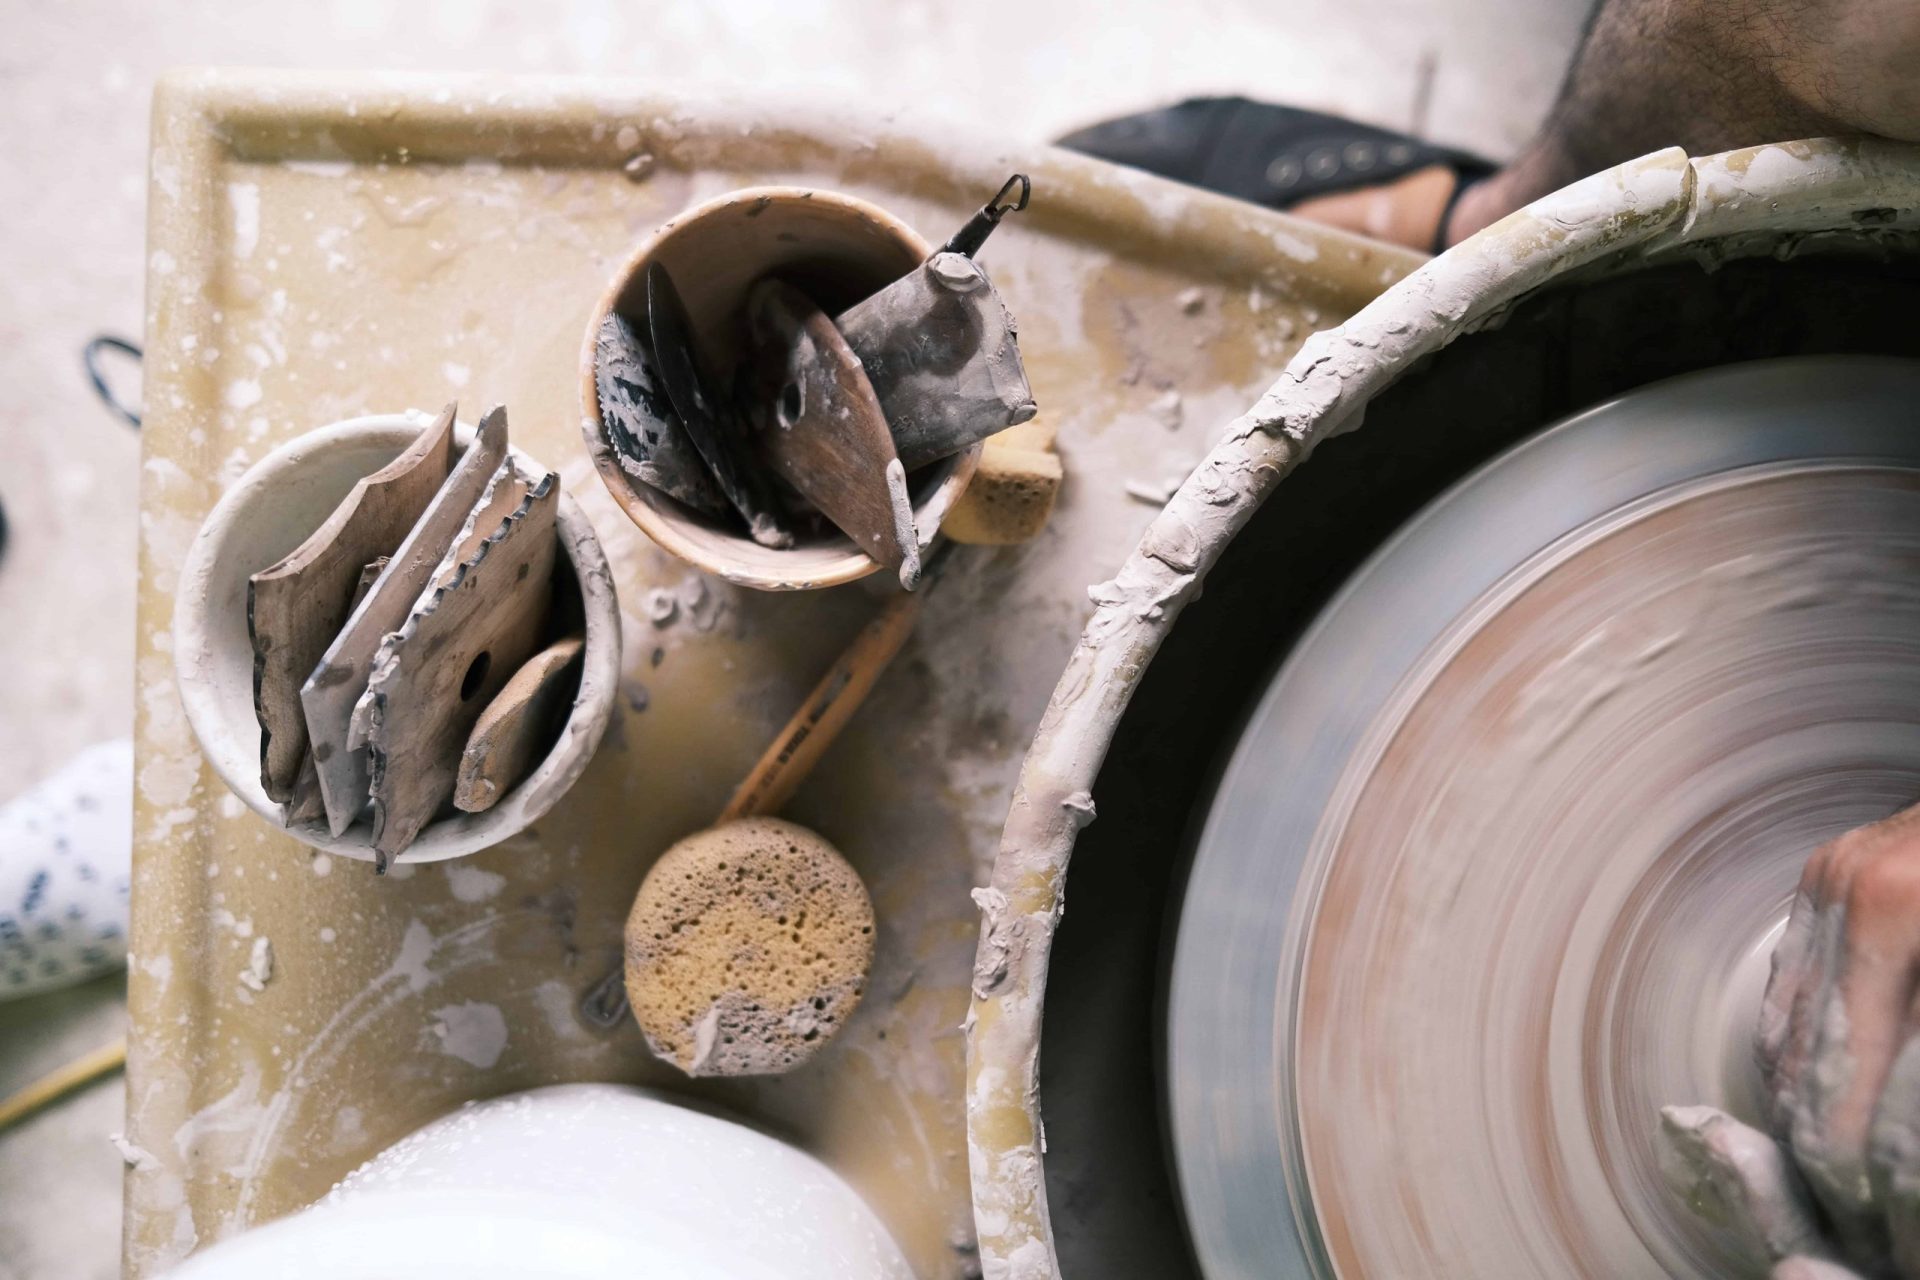 Ceramics pottery wheel with tools